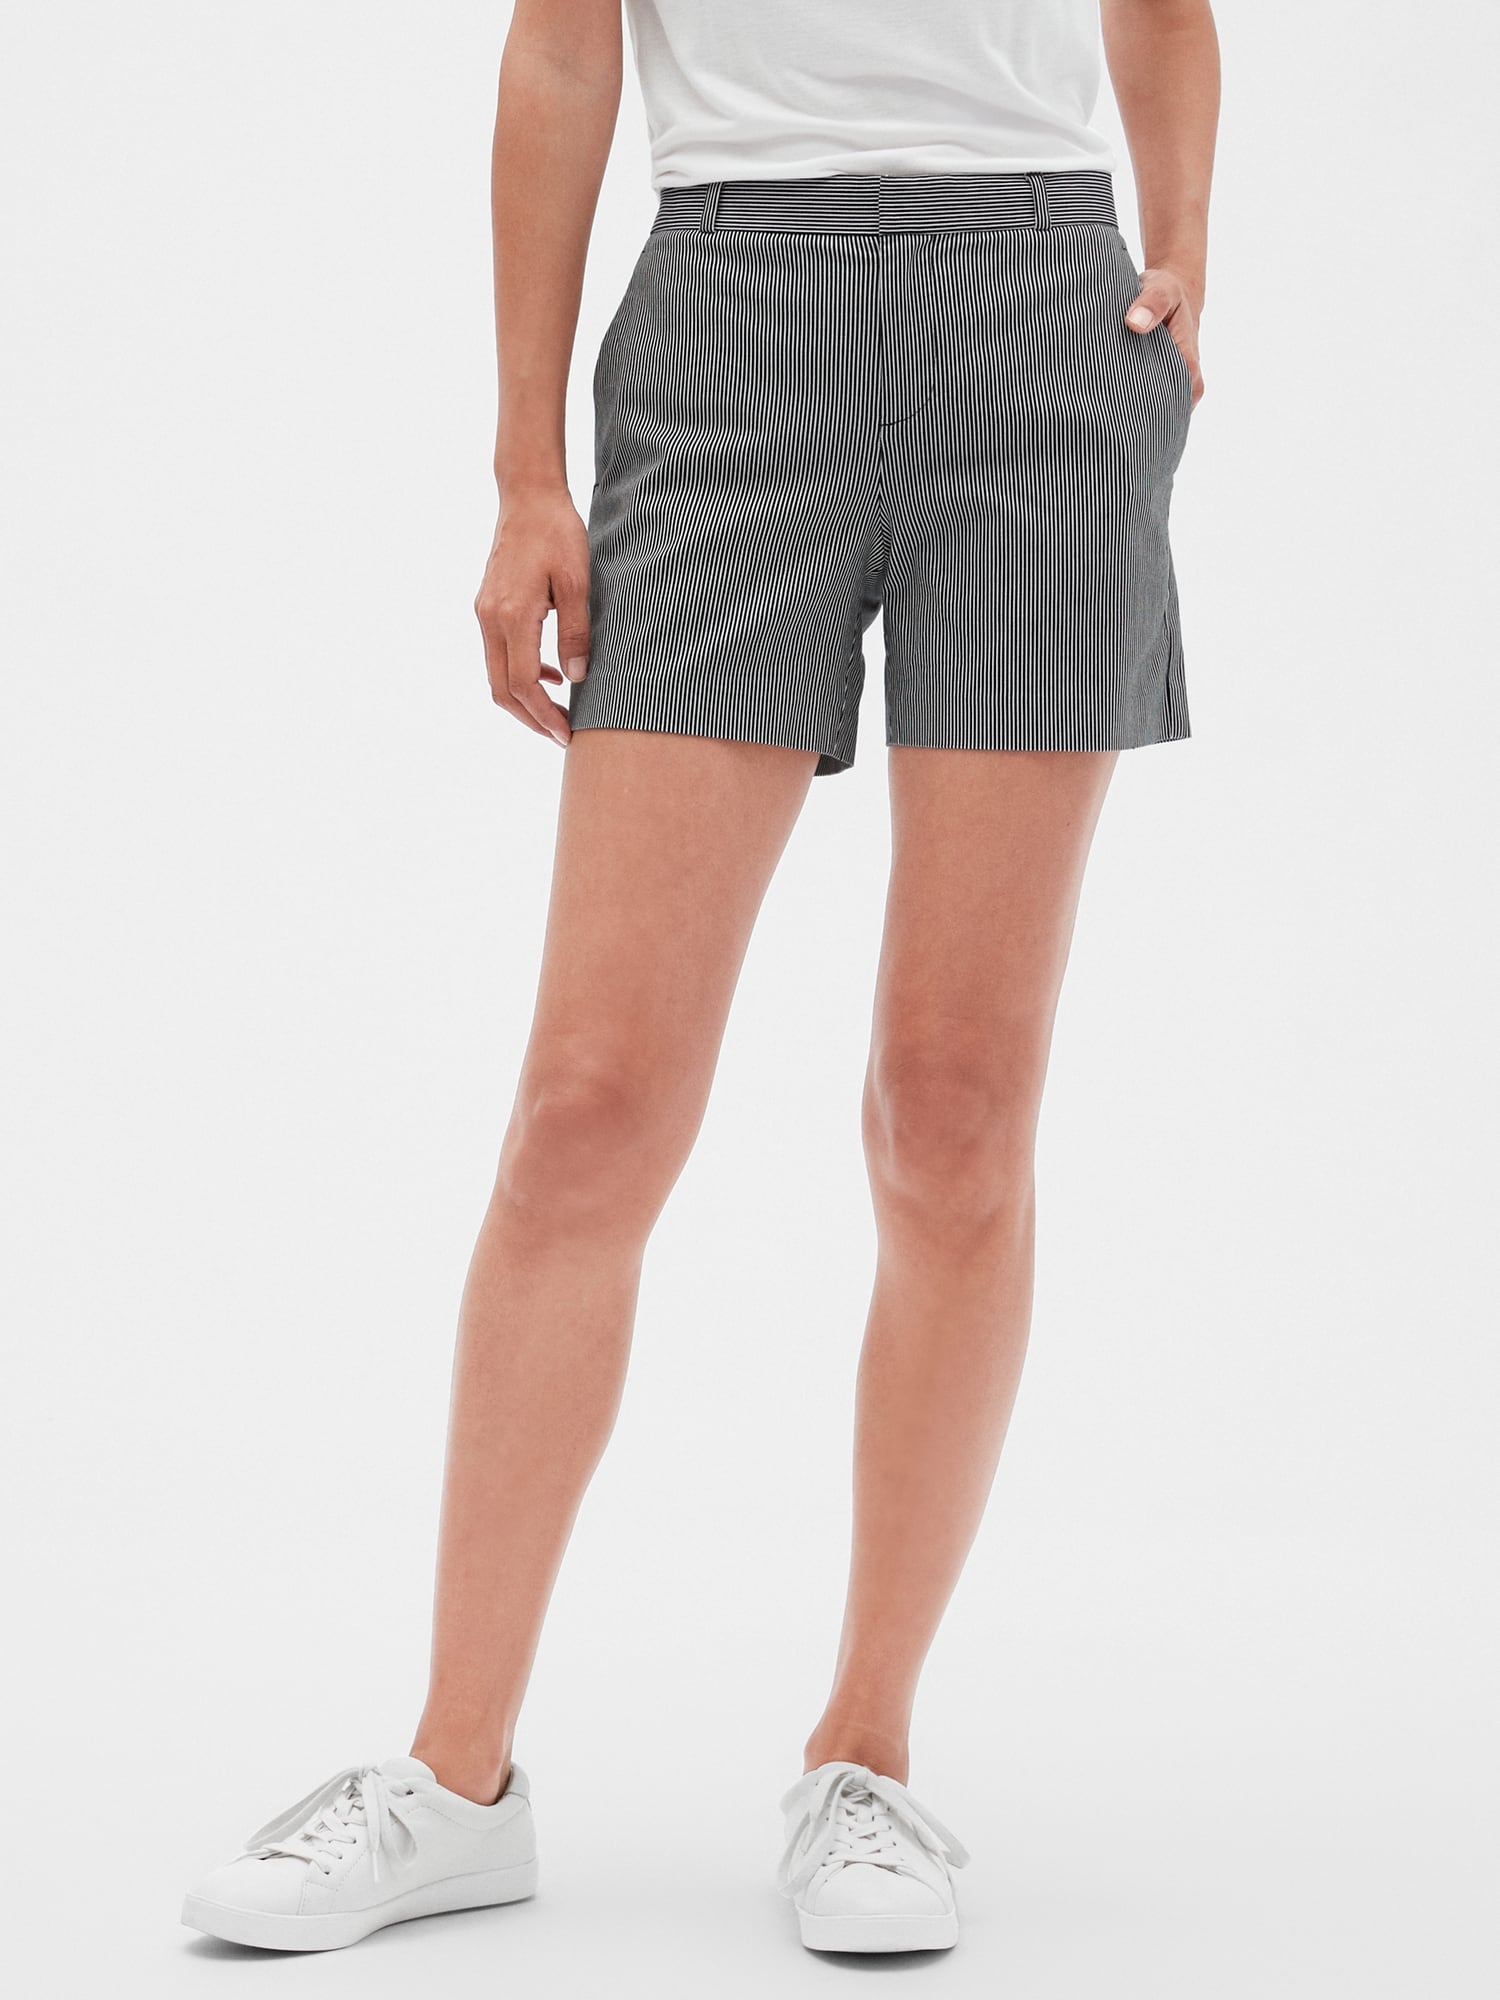 Tailored Stripe Pique Shorts - 5 inch inseam